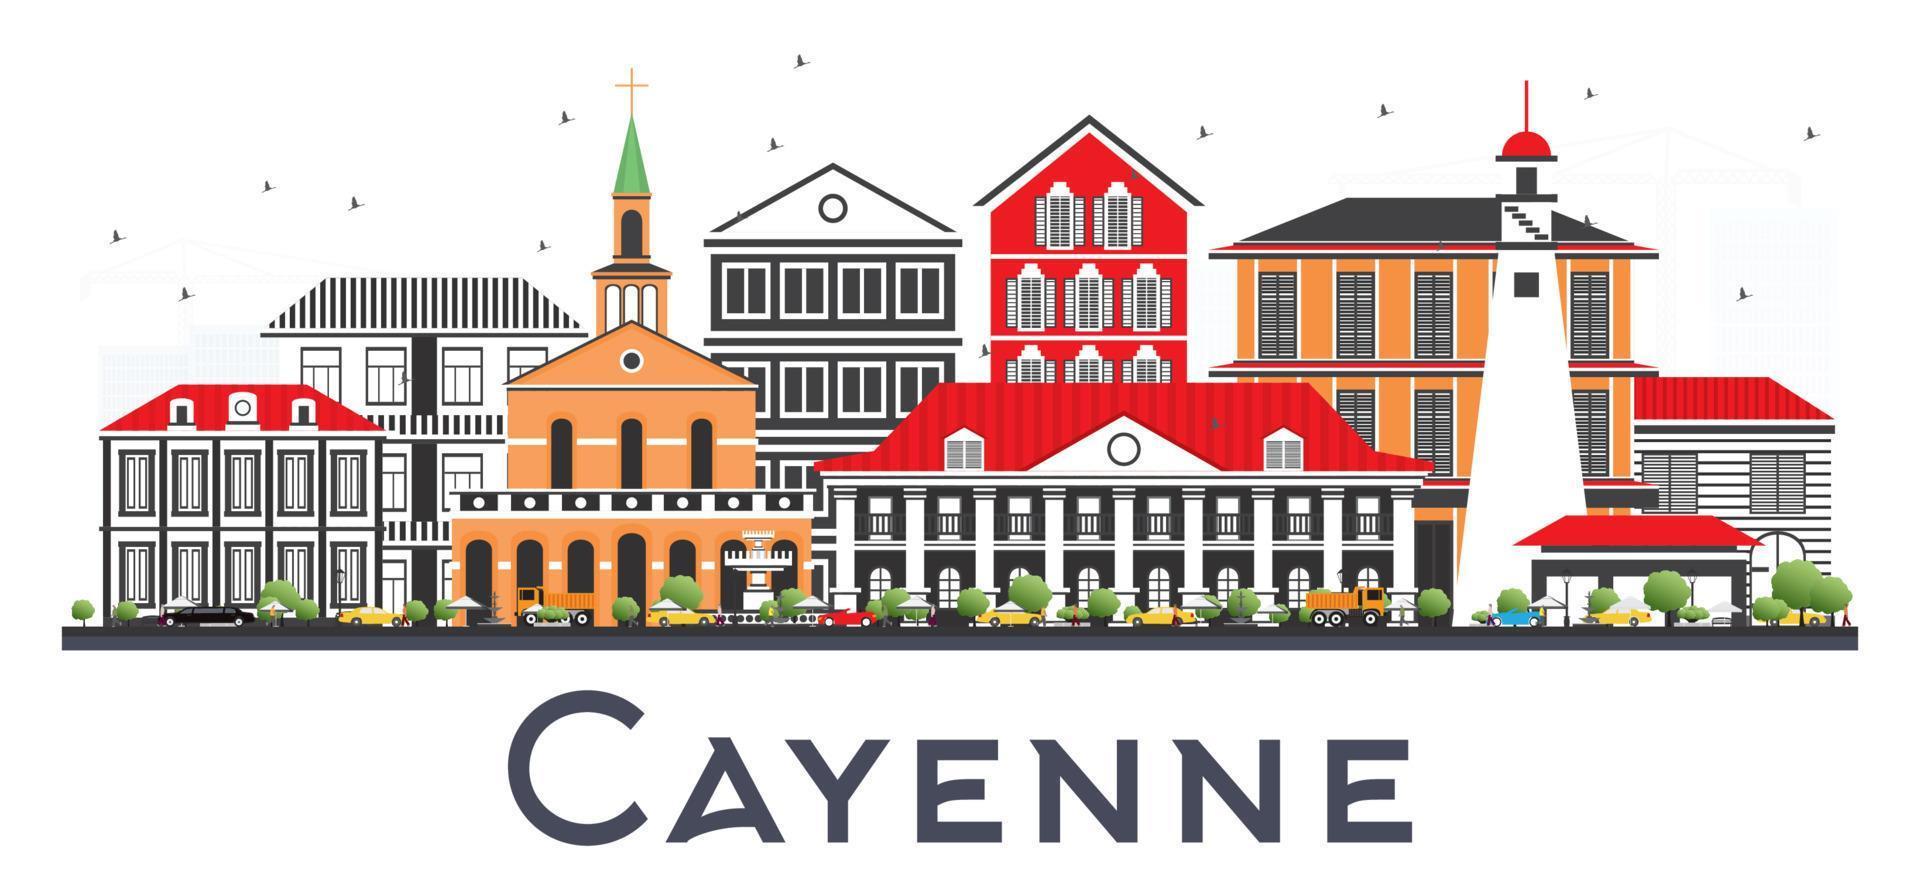 kajenn franska Guyana stad horisont med Färg byggnader isolerat på vit. vektor